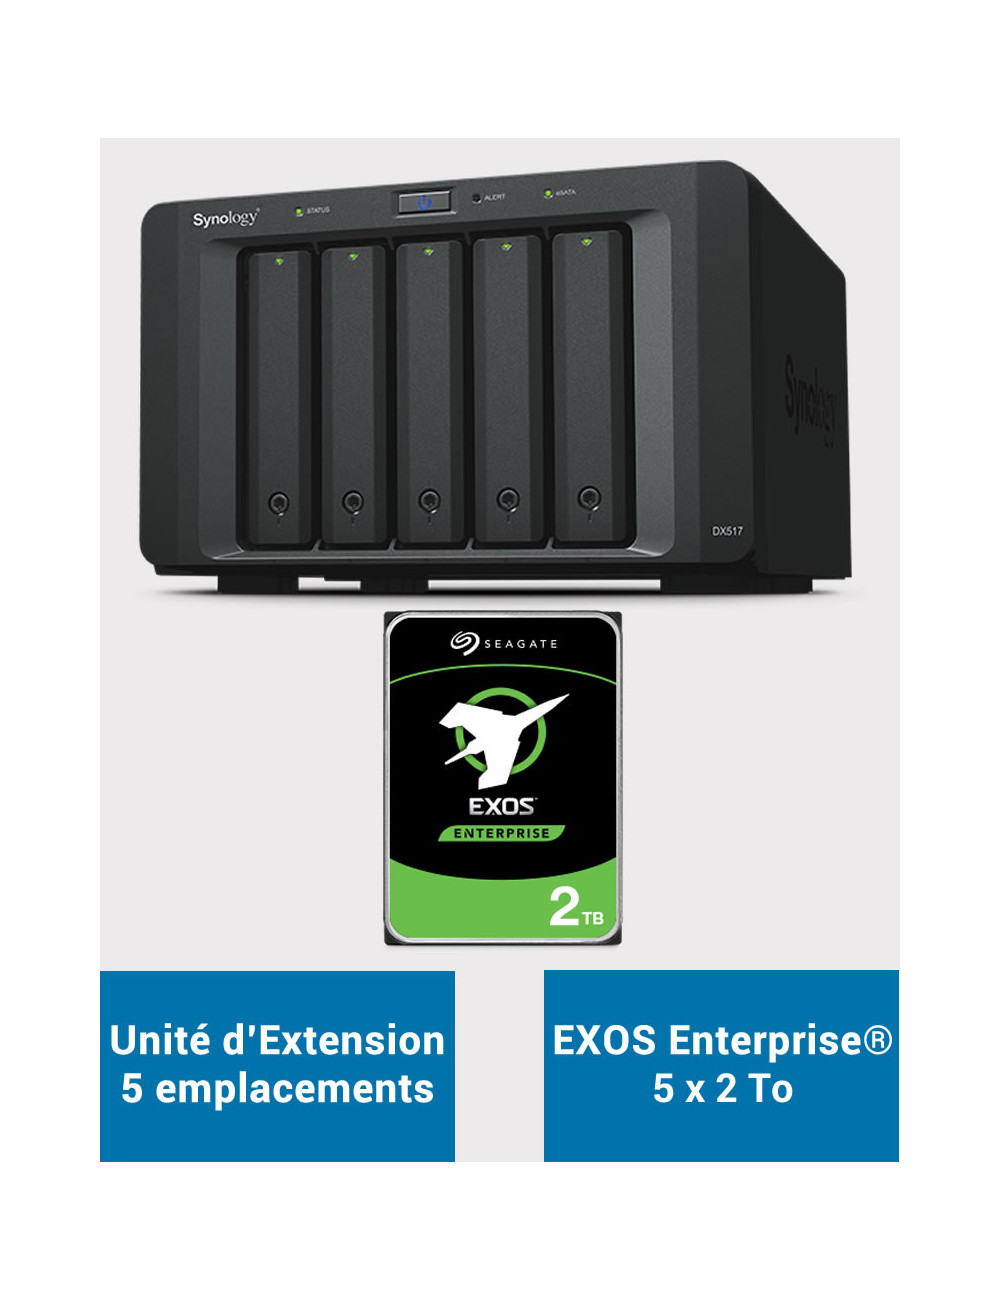 Synology DX517 Unité d'extension EXOS Enterprise 10To (5x2To)